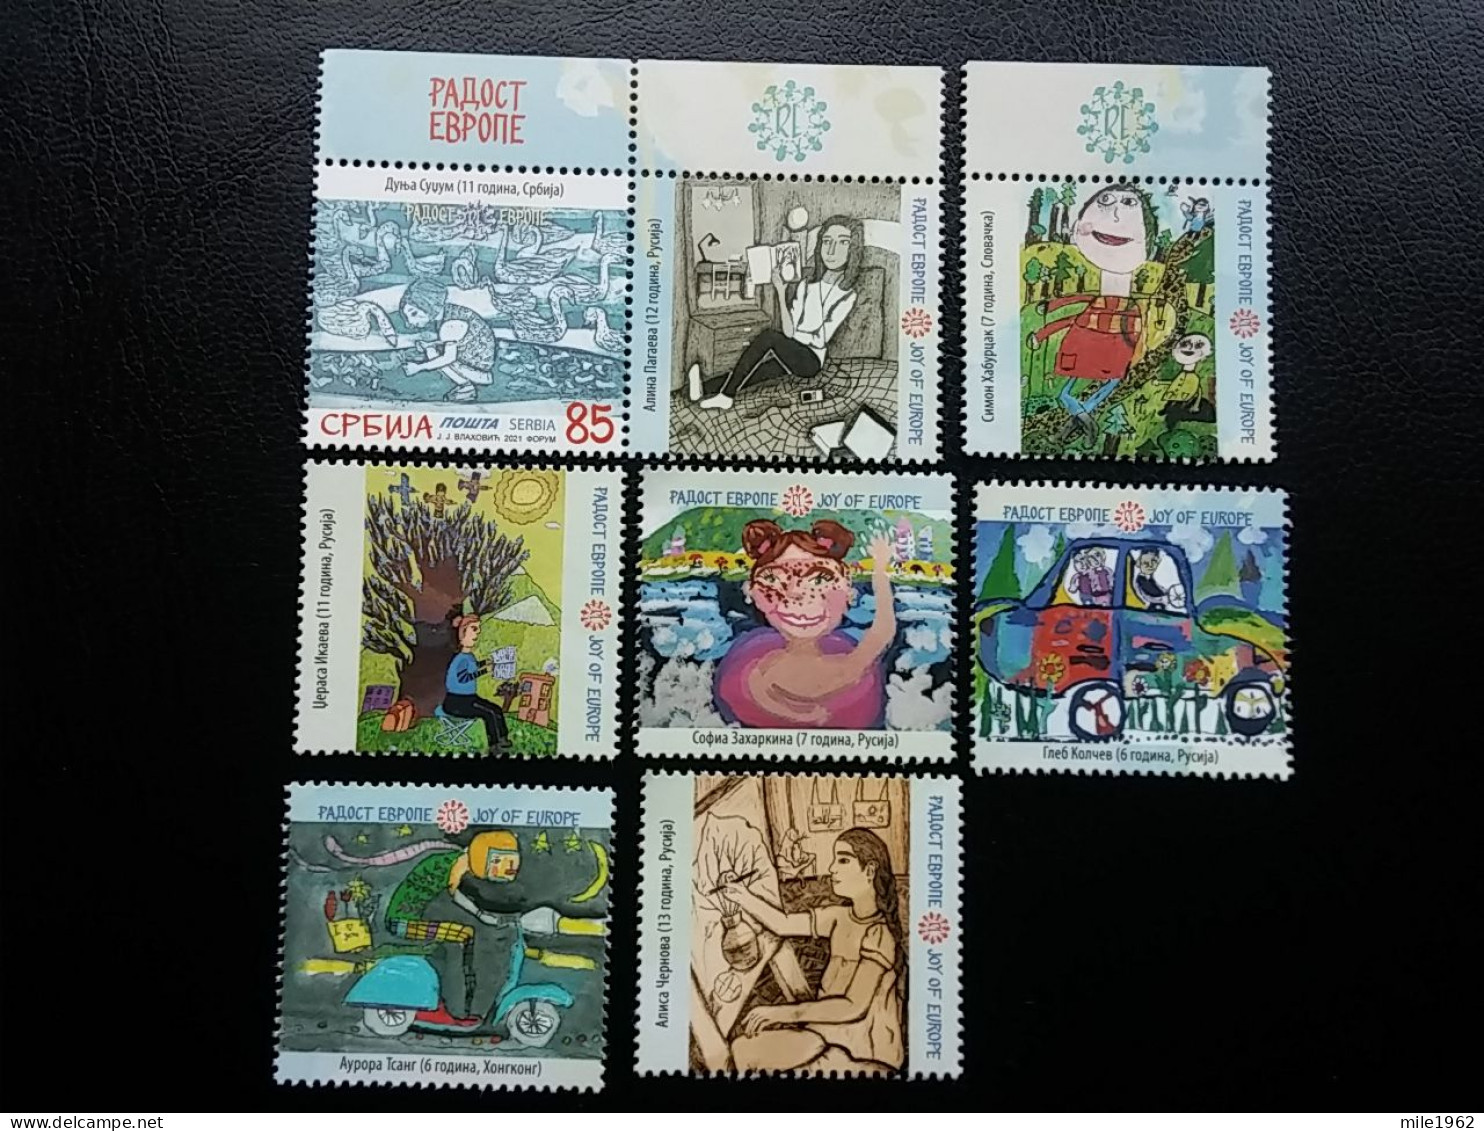 Stamp 3-13 - Serbia 2021 - VIGNETTE + Stamp - Joy Of Europe - Serbia